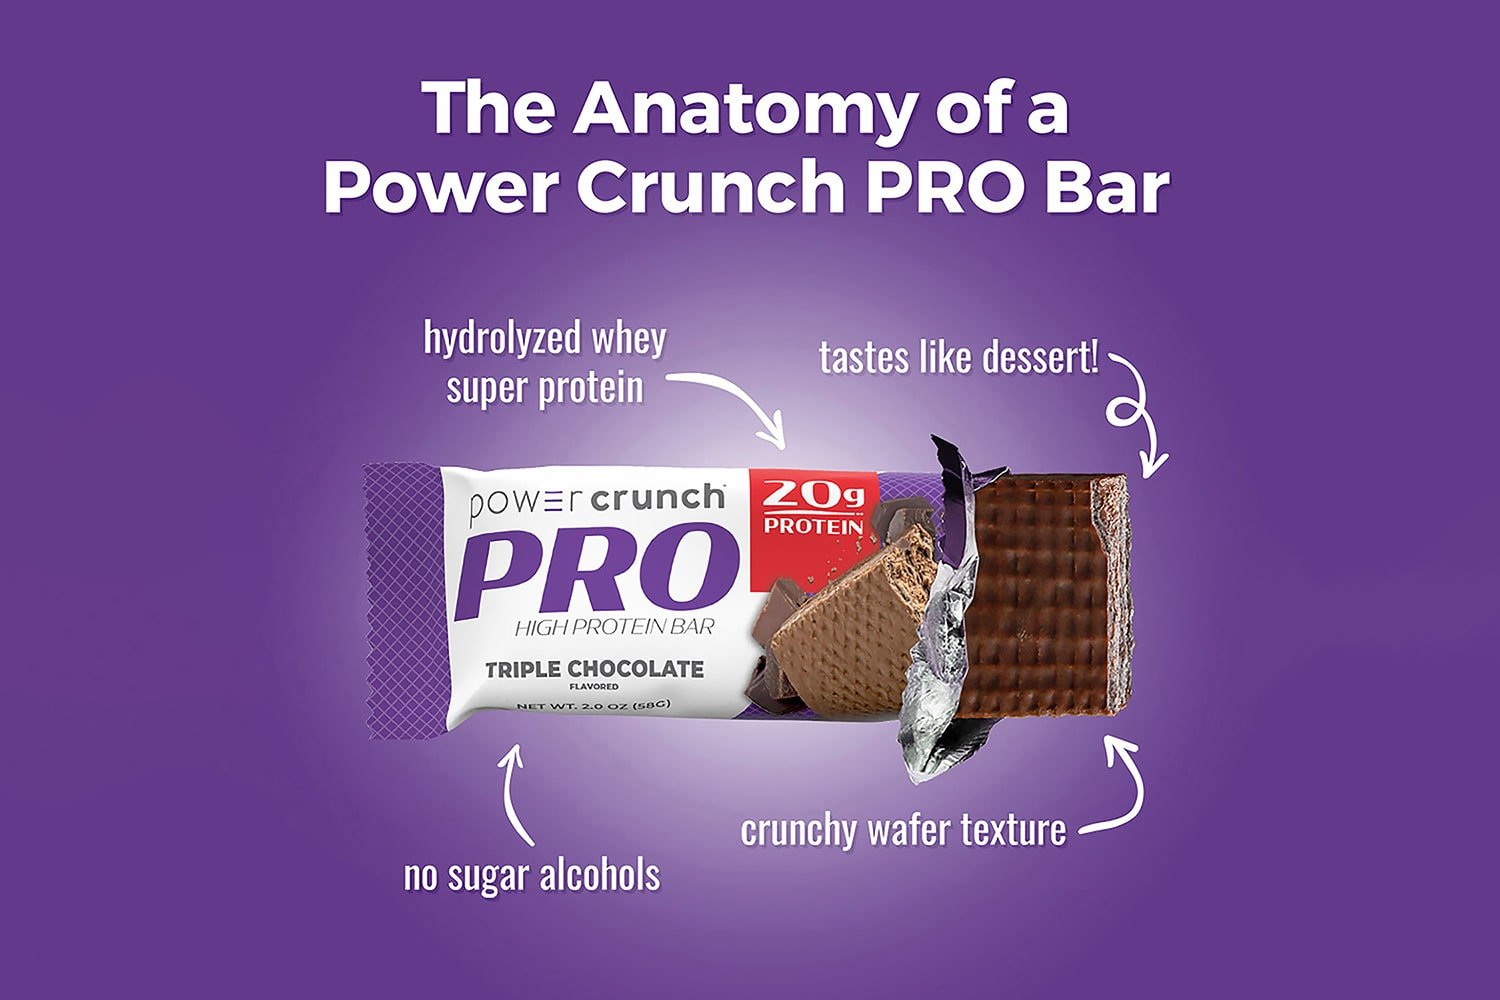 Anatomy of a Power Crunch PRO Triple Chocolate bar with hydrolyzed whey protein, crunchy wafers